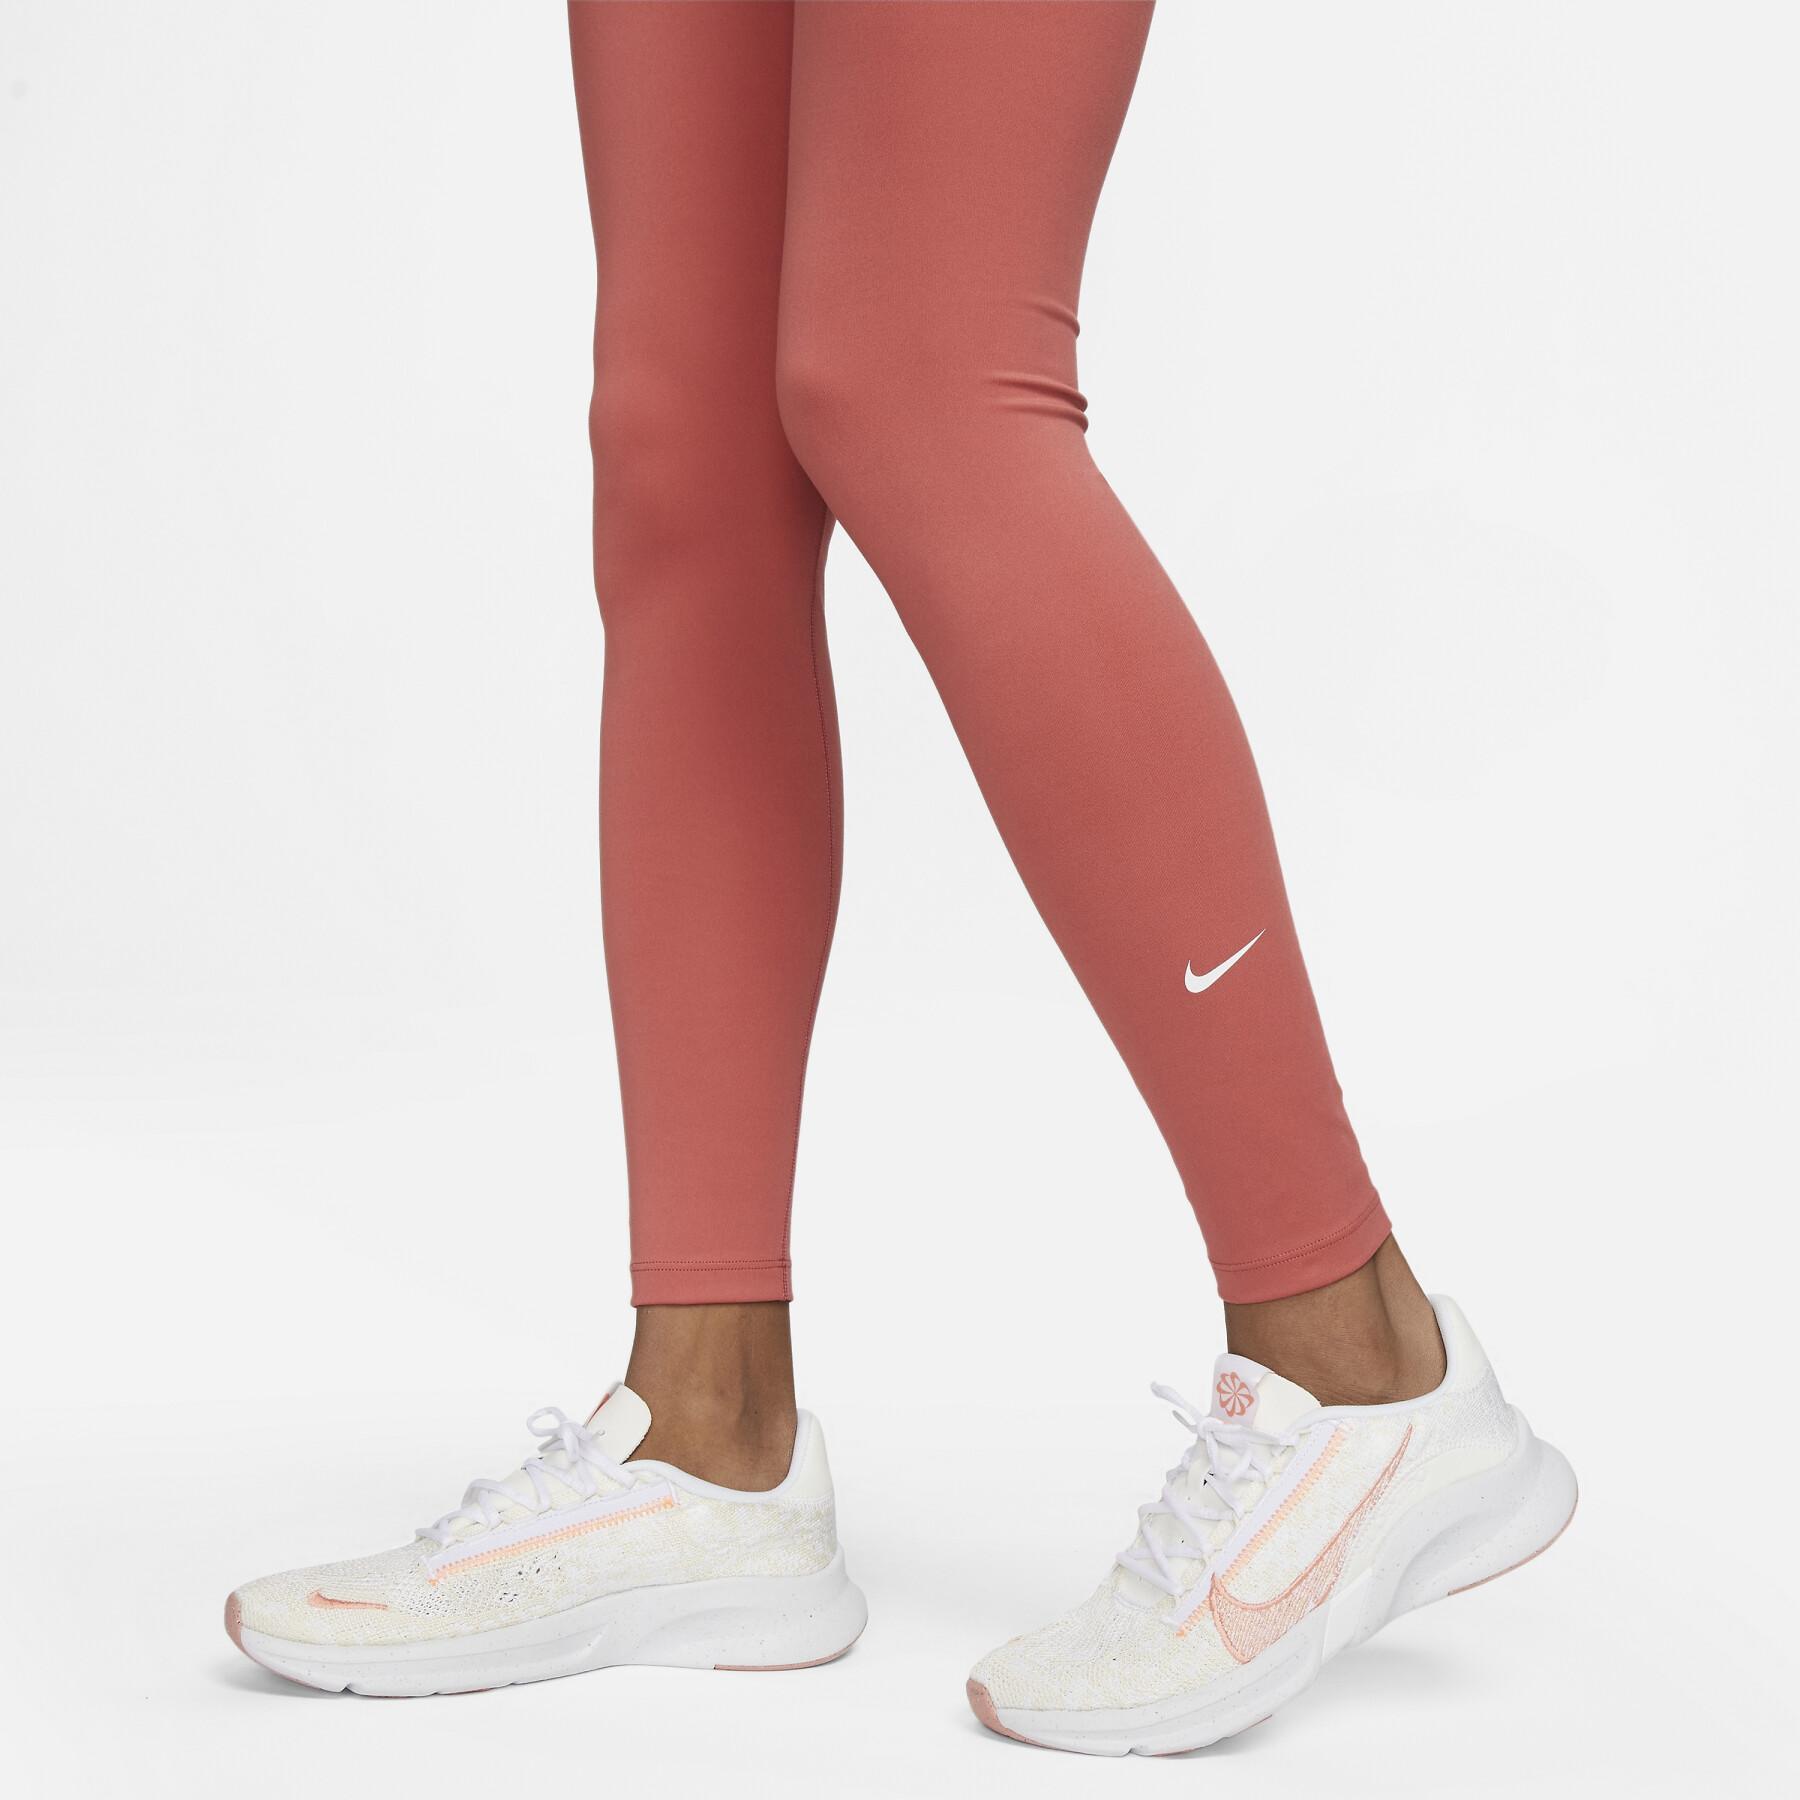 Legging mulher Nike One